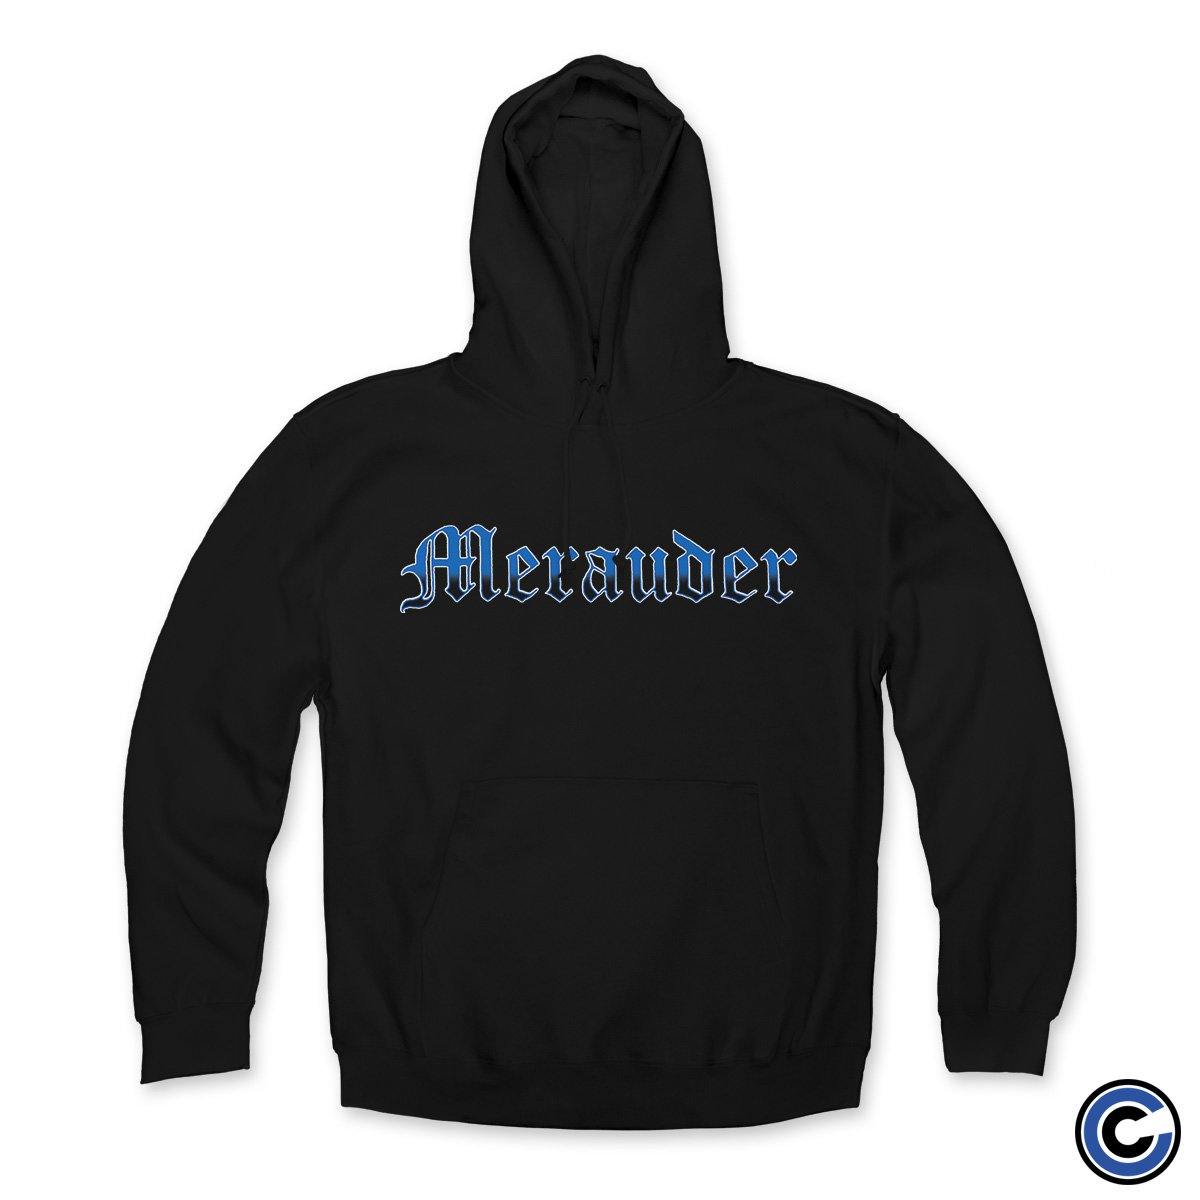 Buy – Merauder "Medieval" Hoodie – Band & Music Merch – Cold Cuts Merch